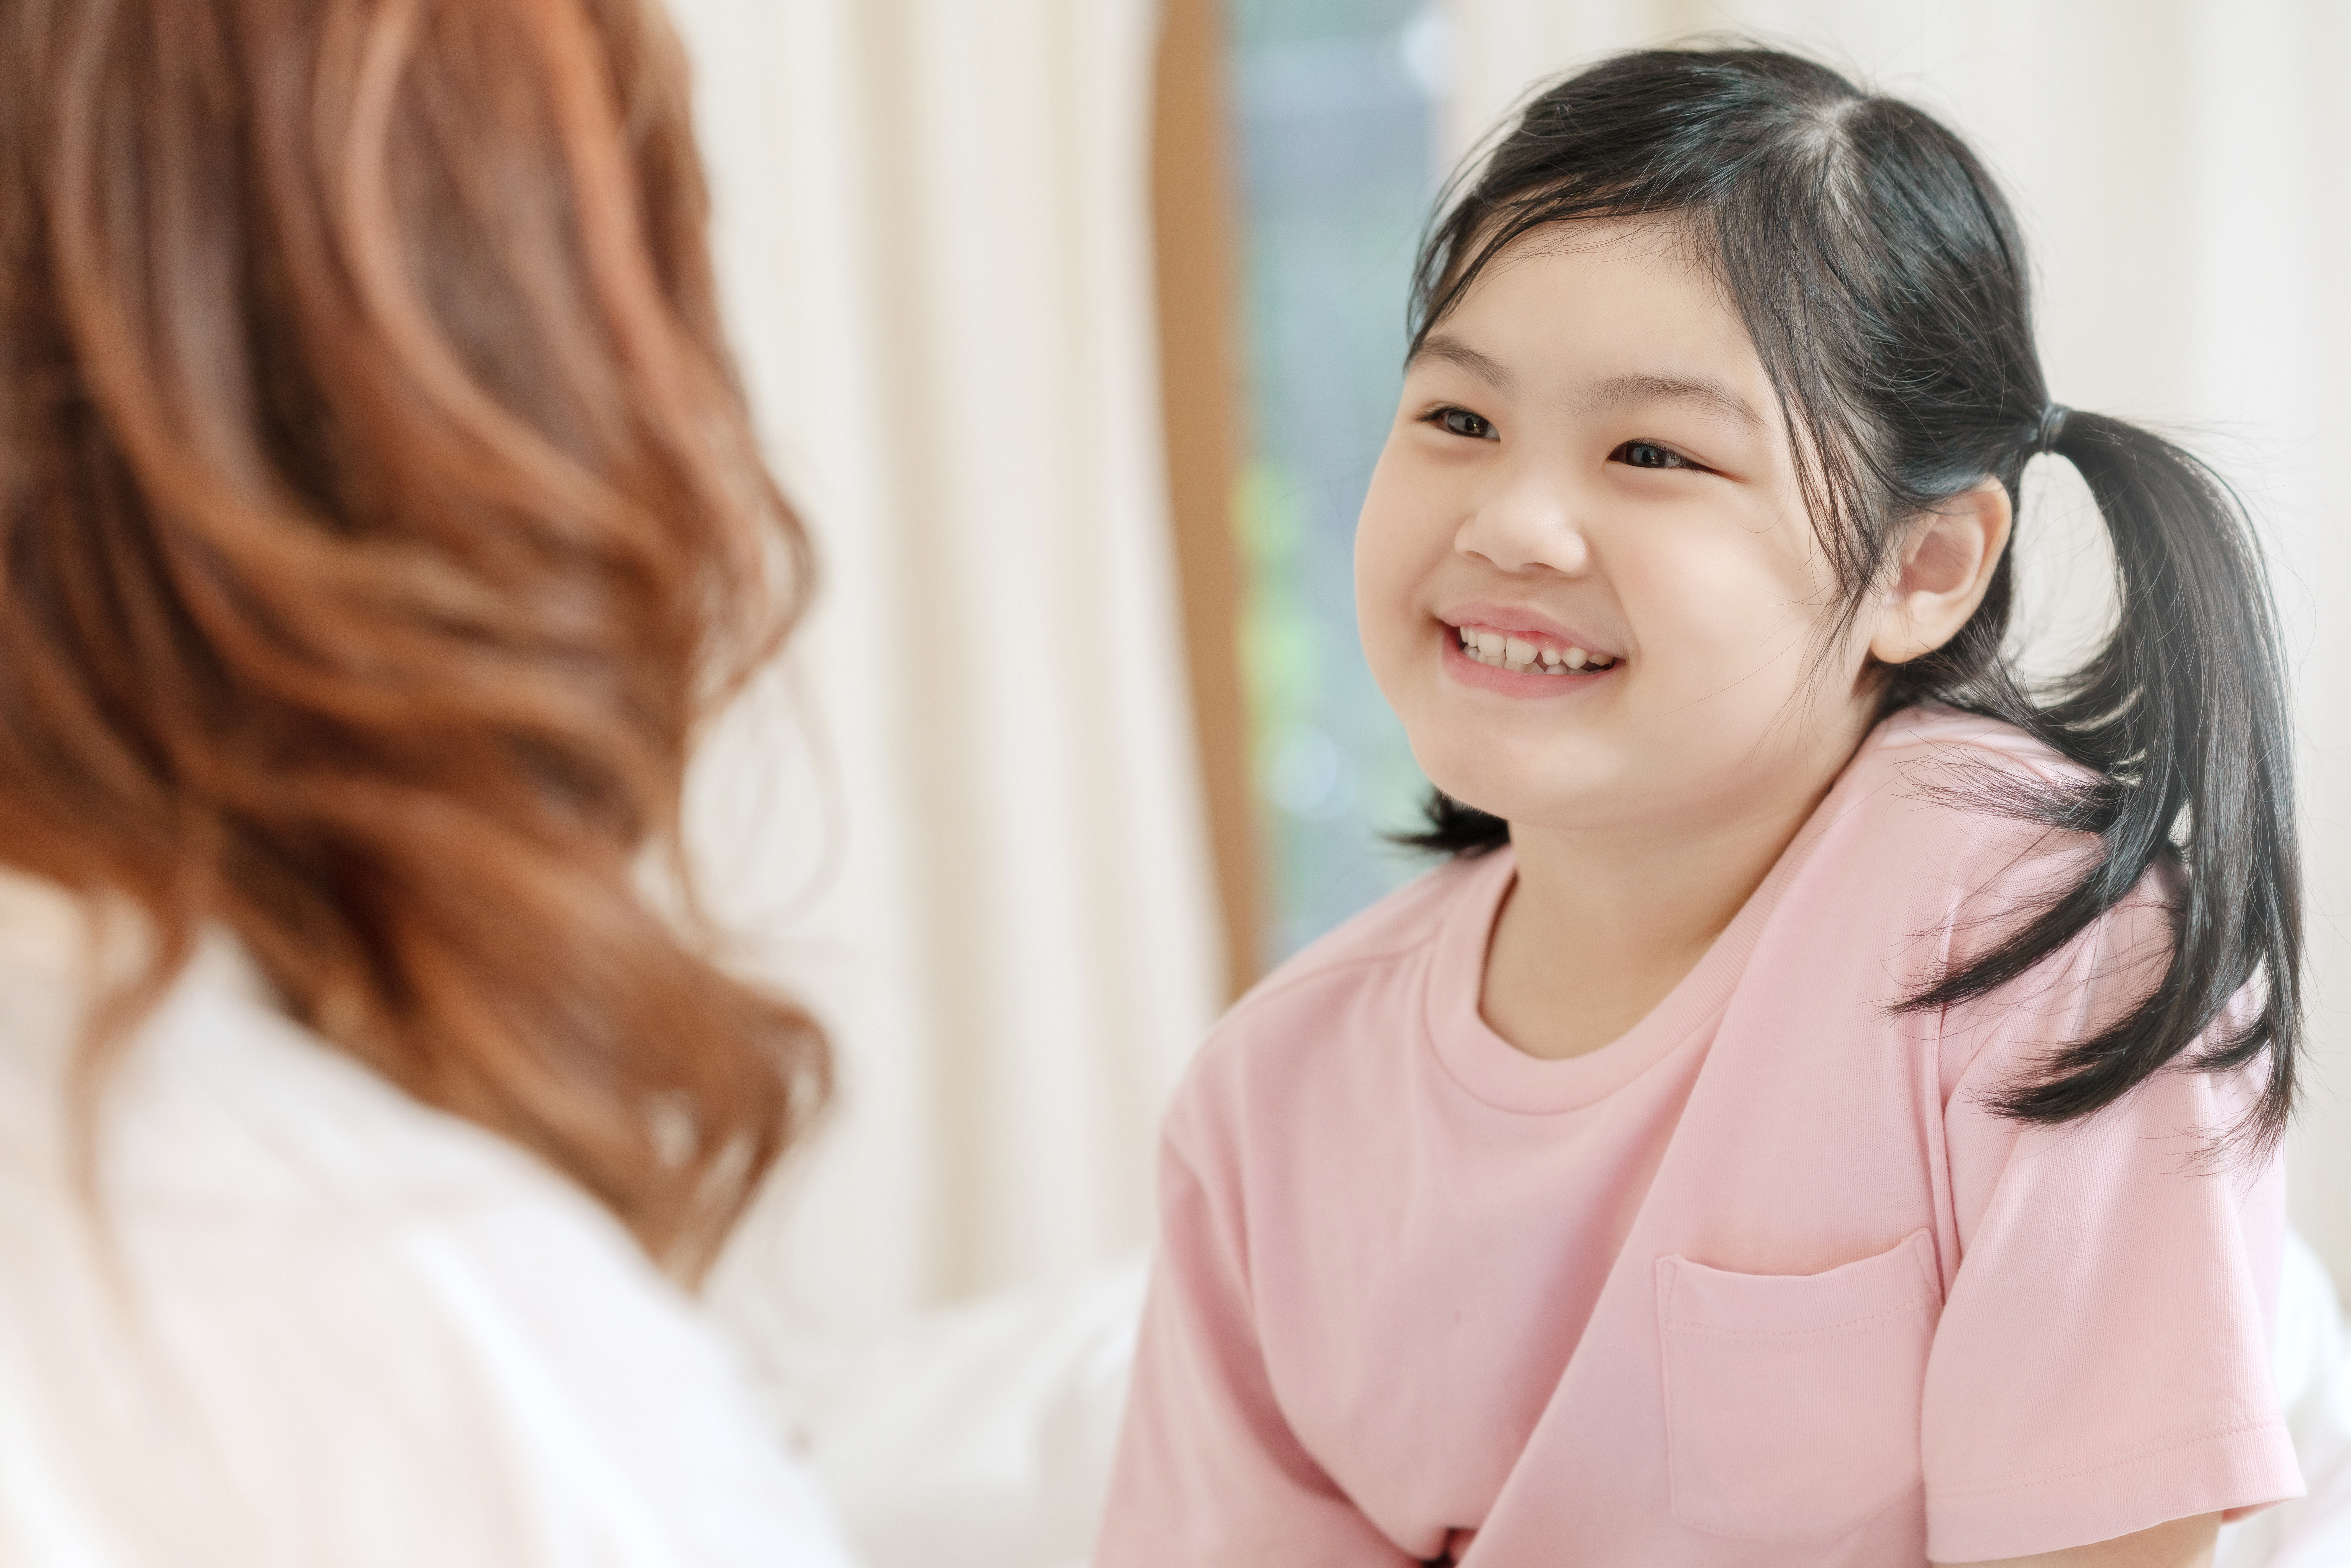 How to Build your Child’s Self-Esteem